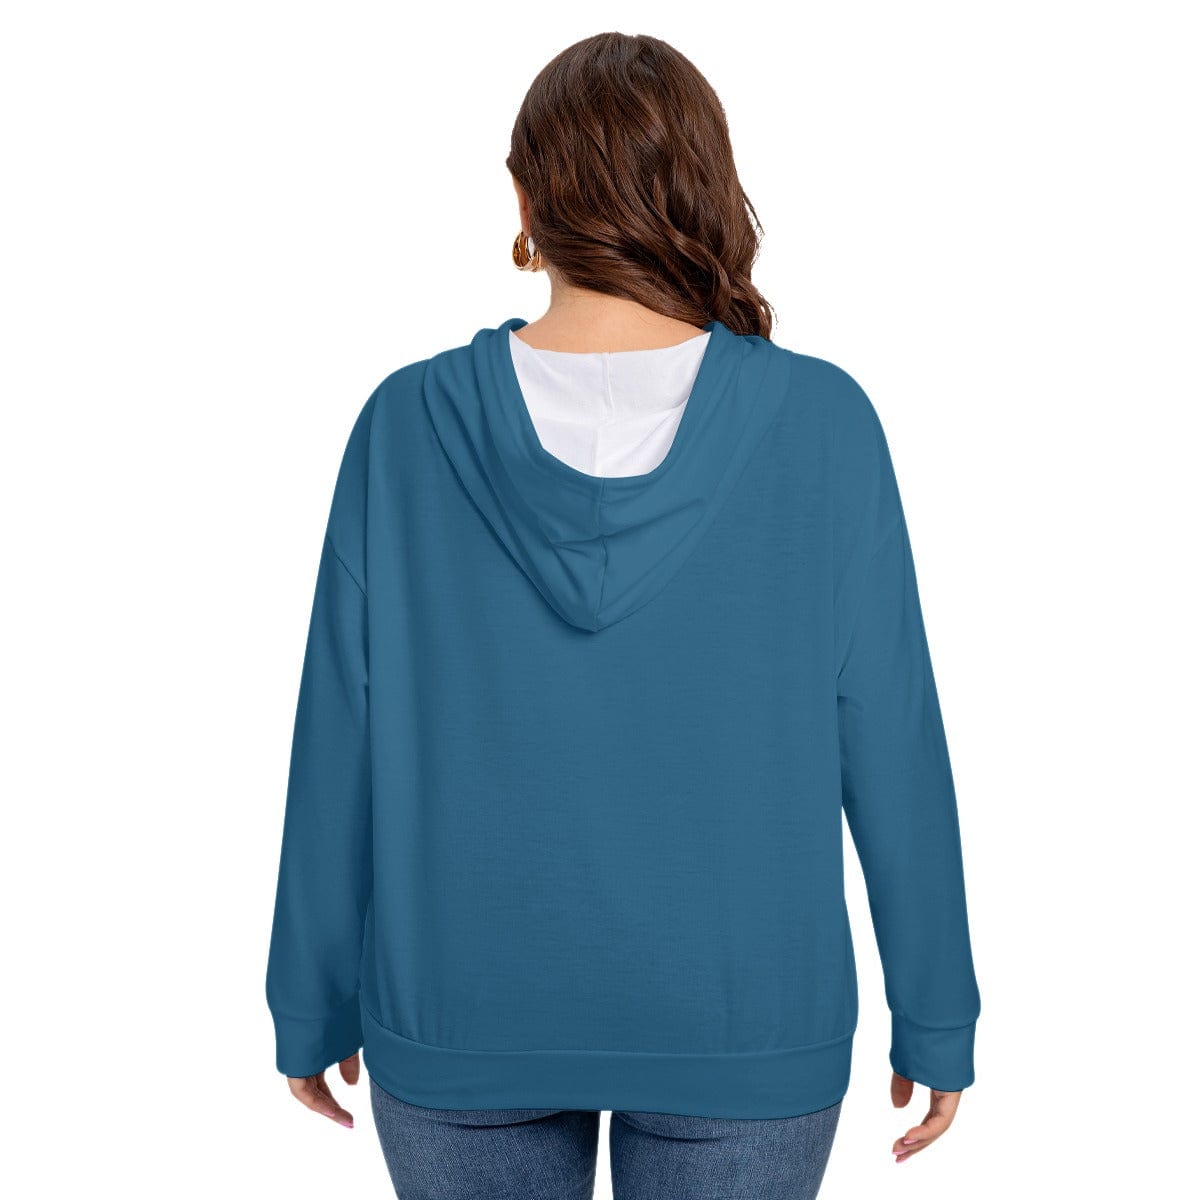 Yoycol 2XL / White All-Over Print Women's Long Sleeve Sweatshirt With Hood(Plus Size)